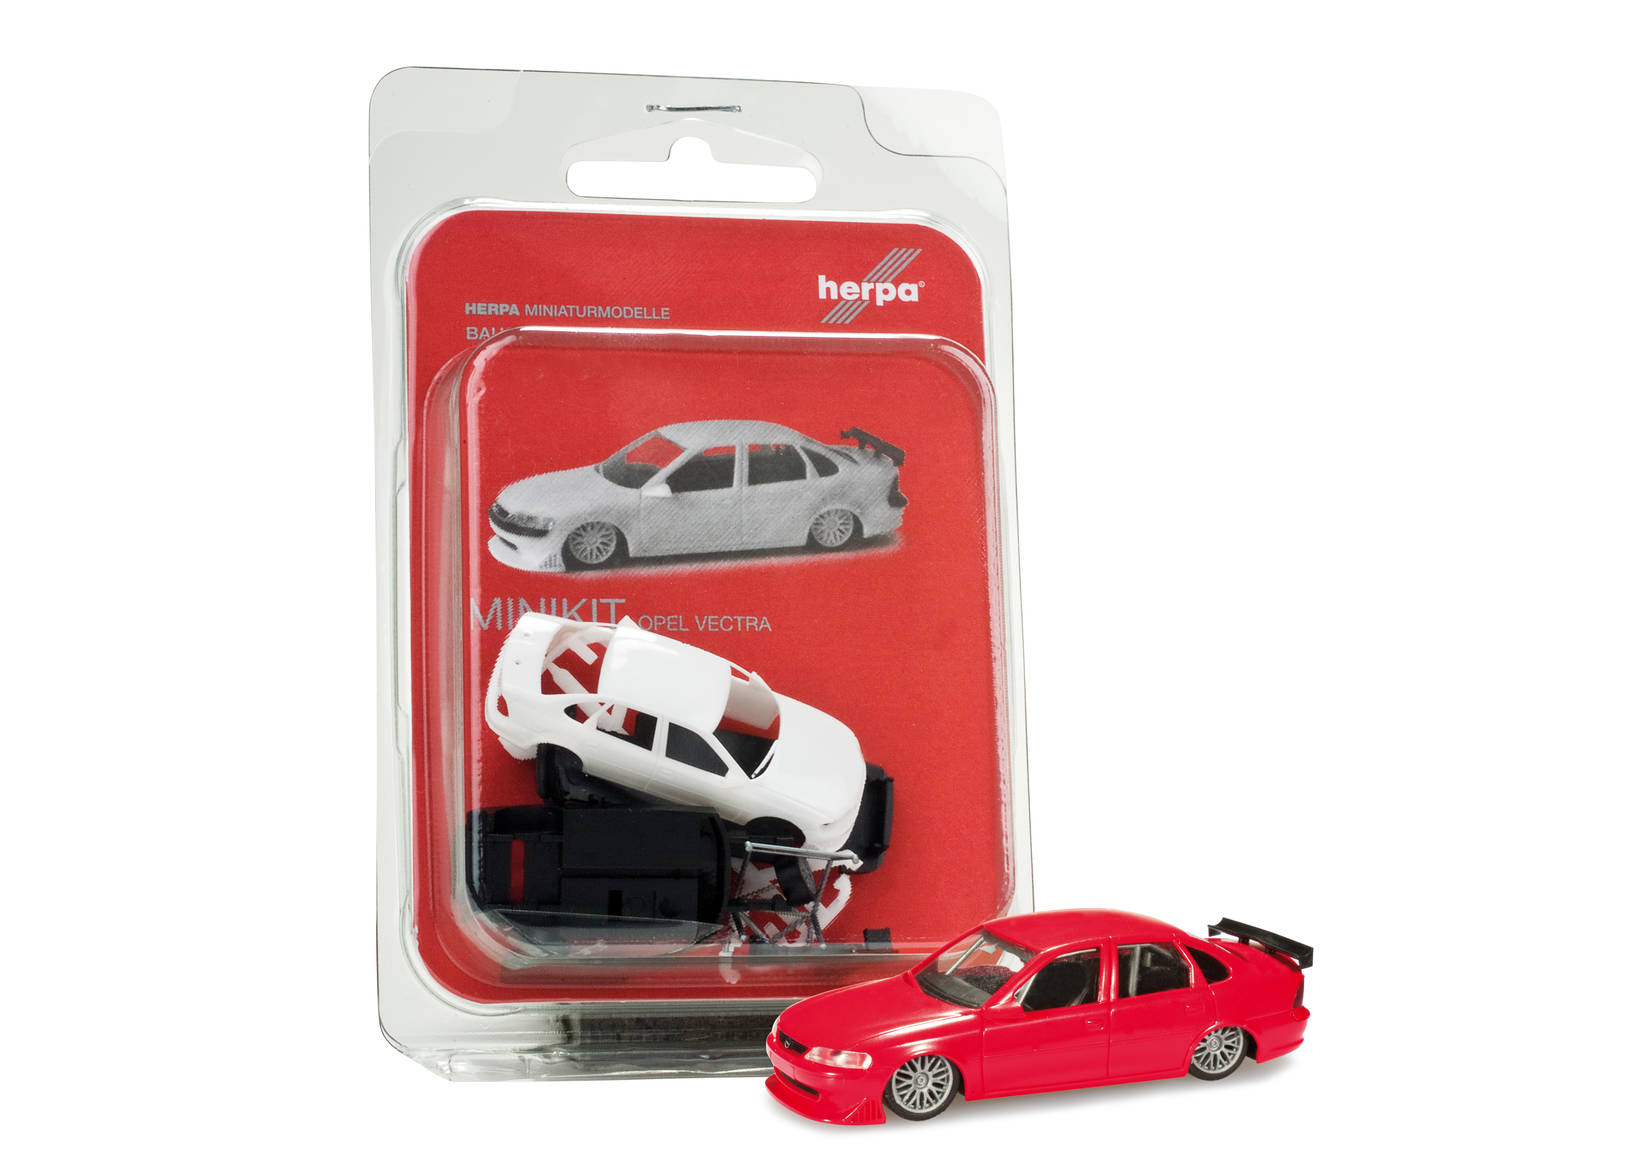 Herpa MiniKit: Opel Vectra racing car, flame red